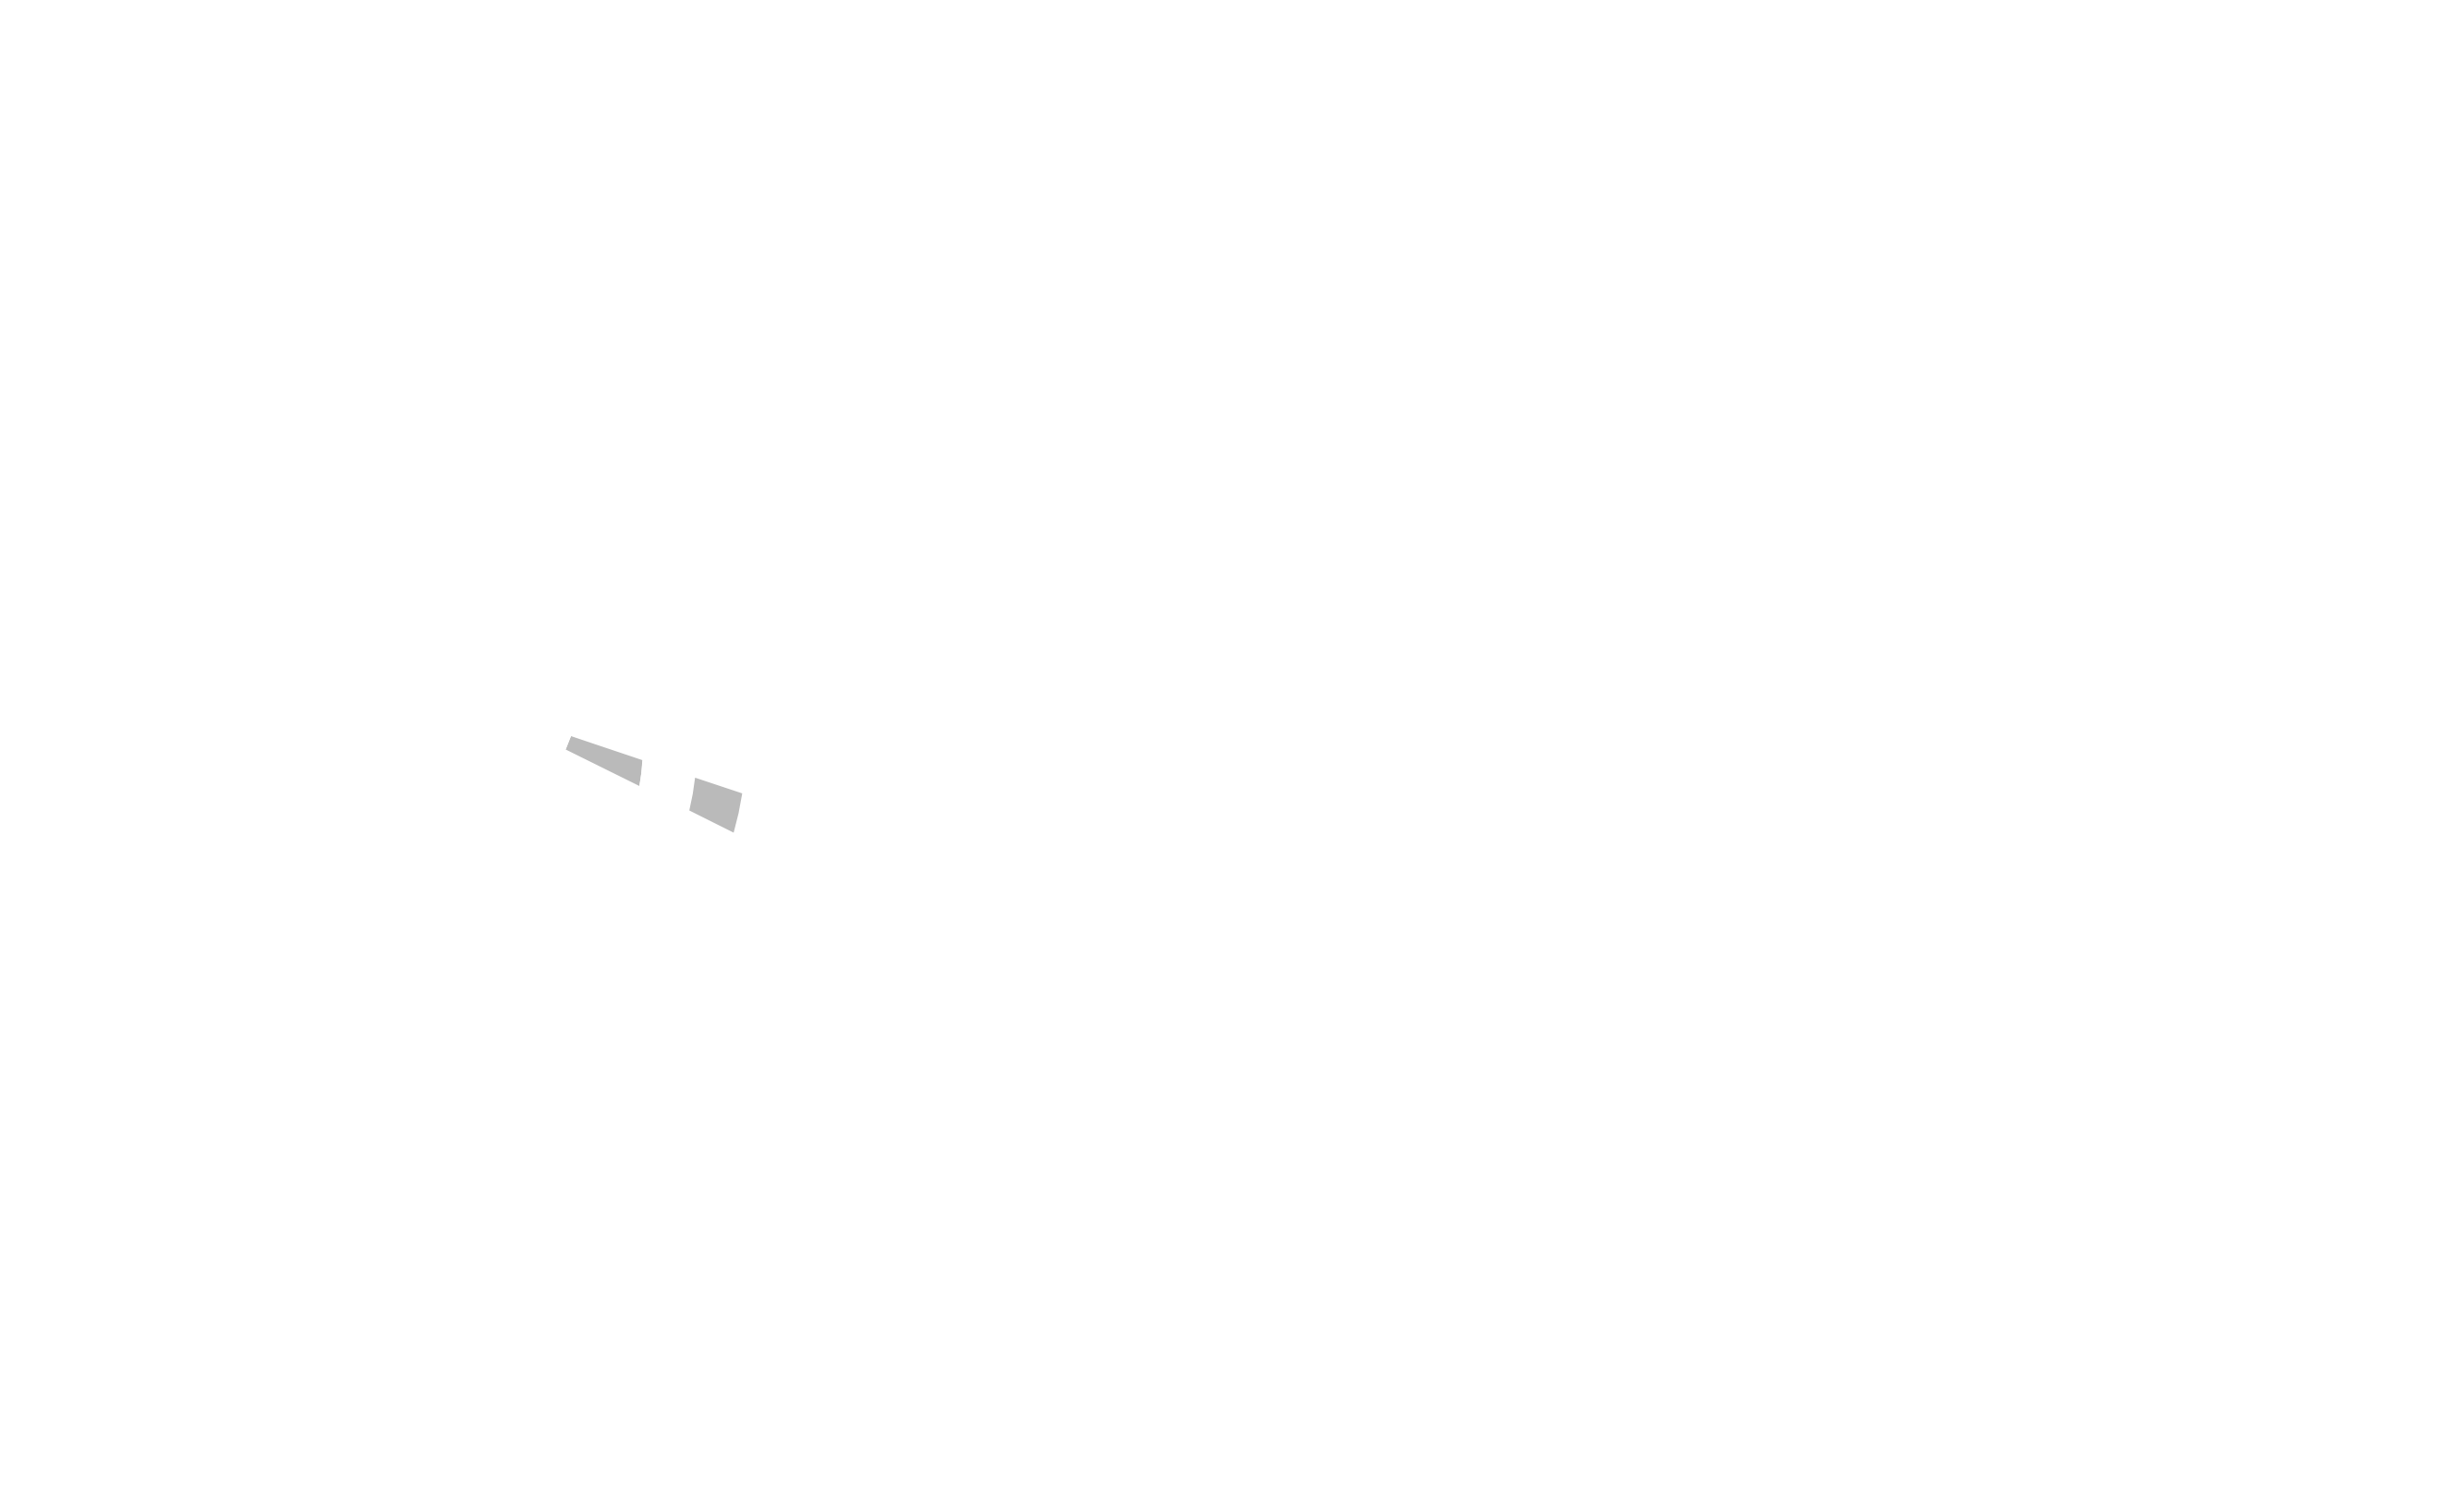 Relationships Unsugarcoated